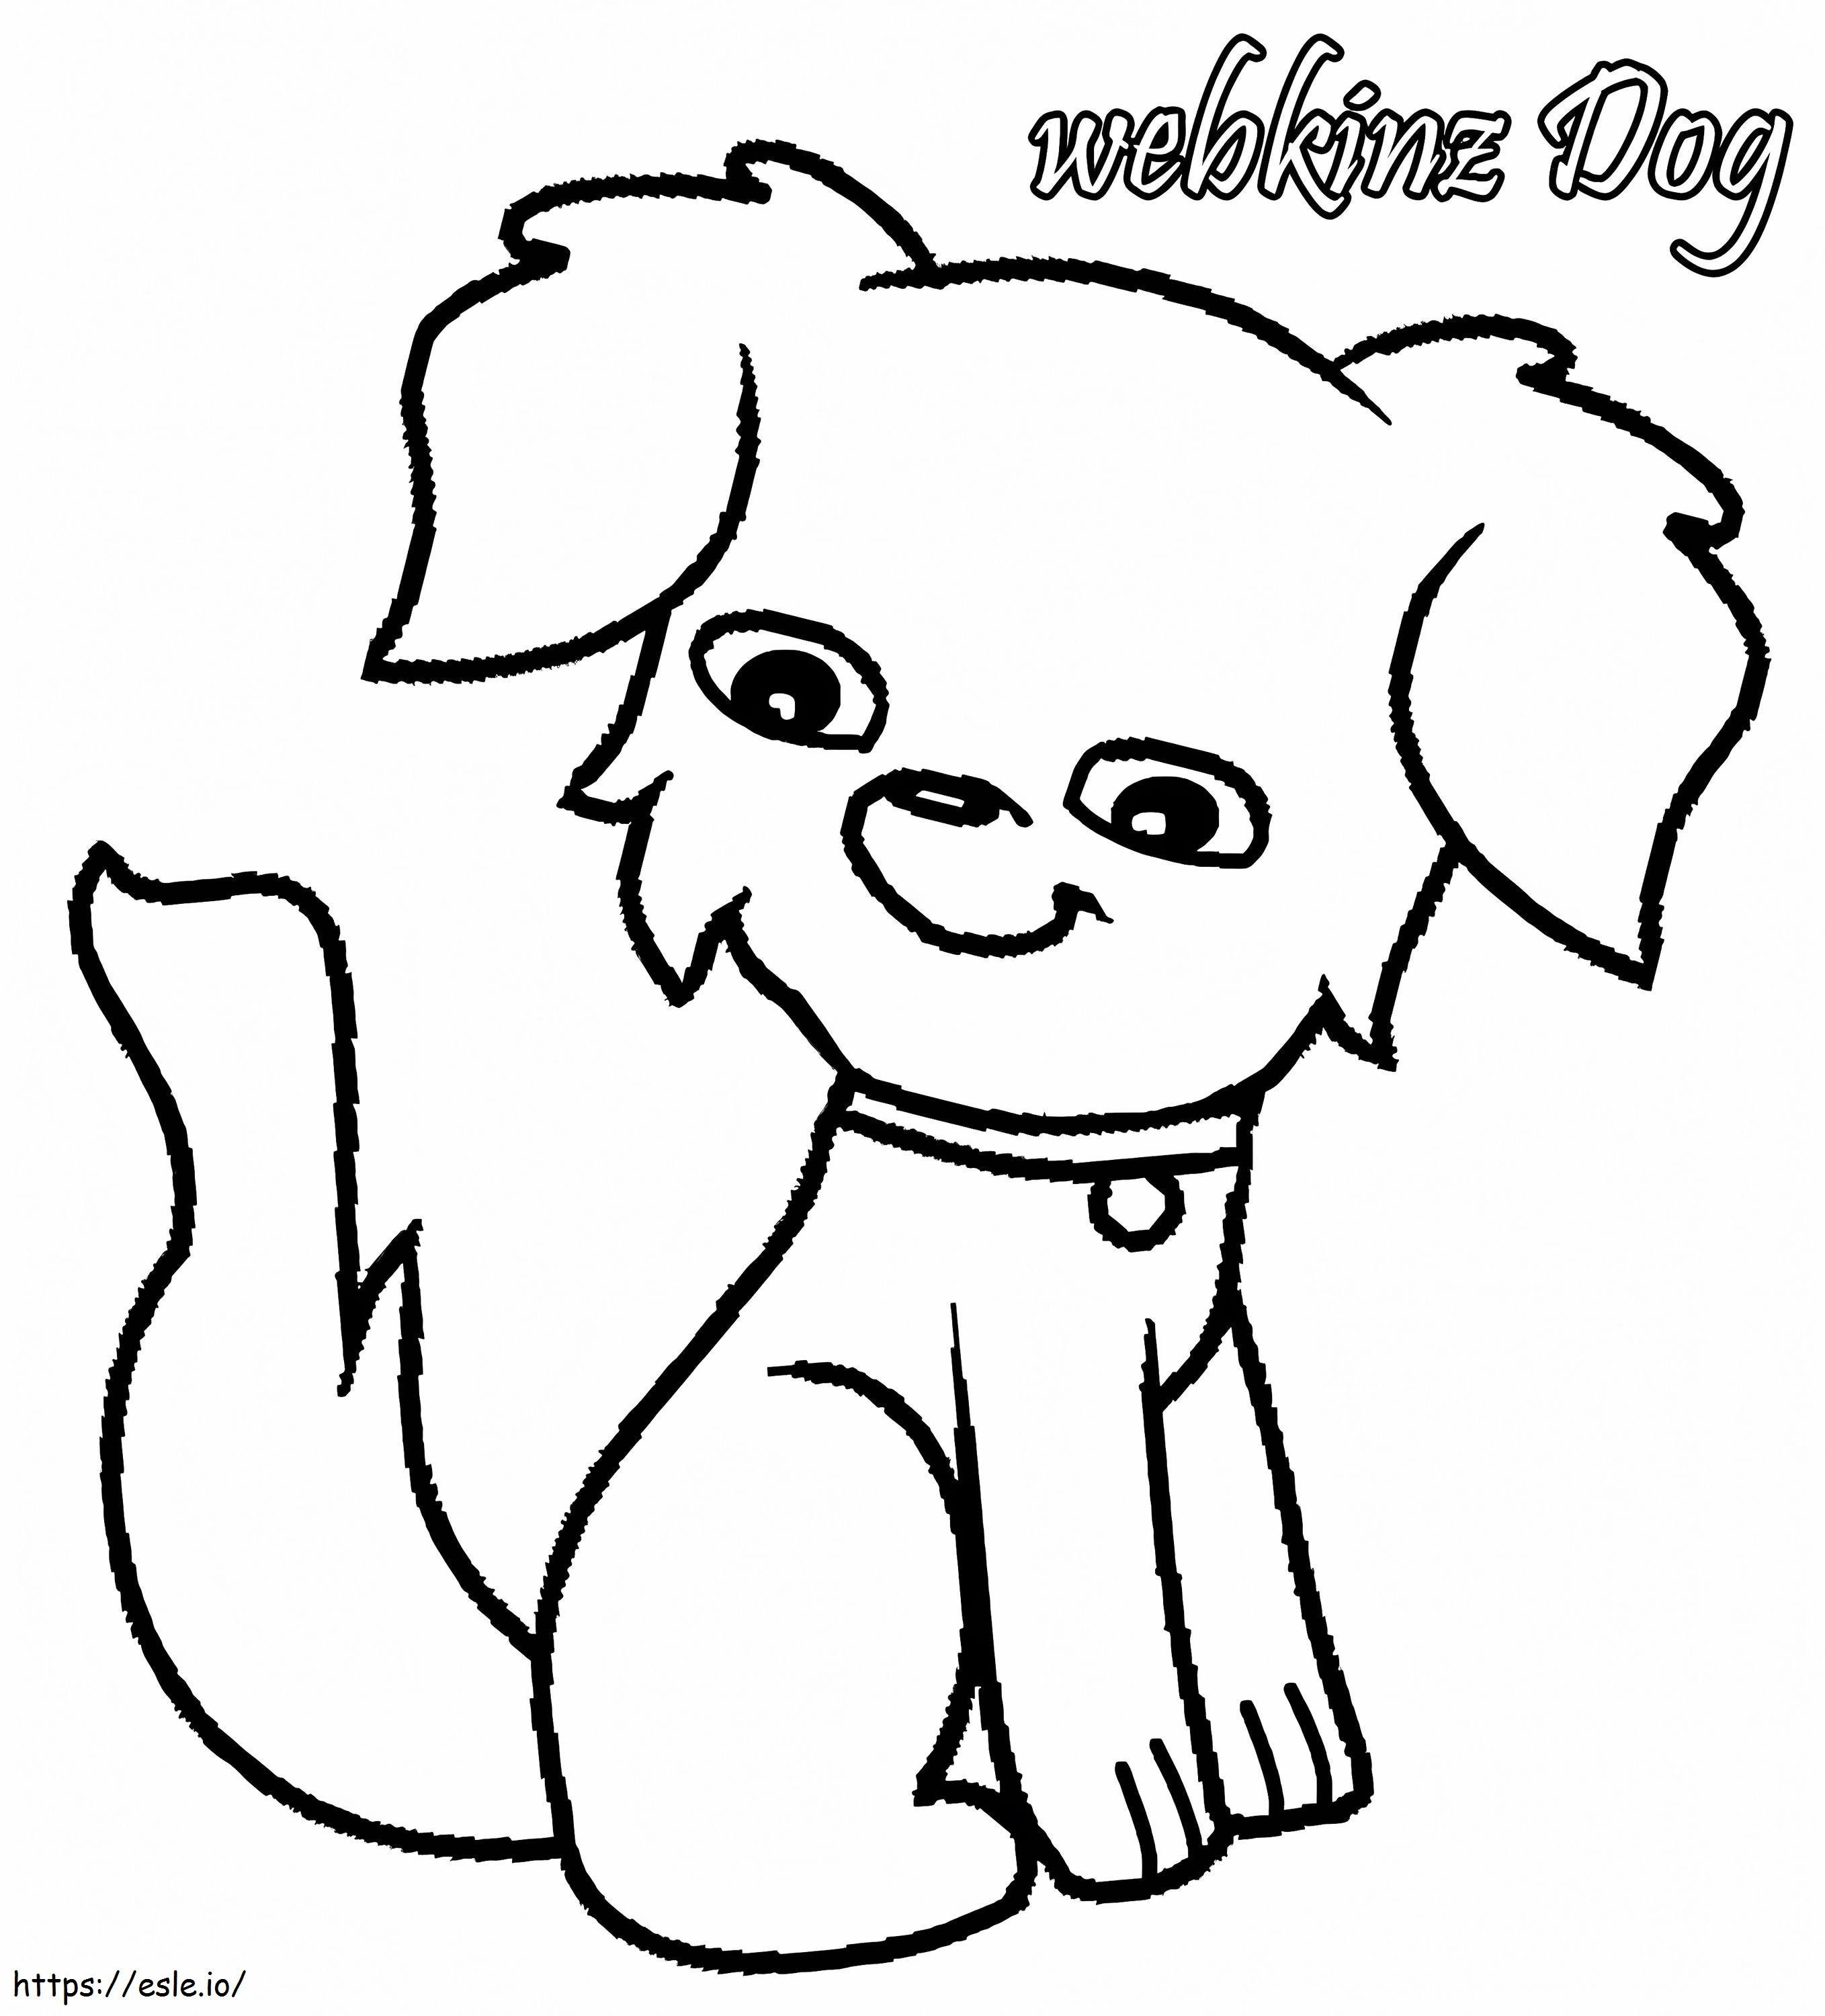 Cute Webkinz Dog coloring page